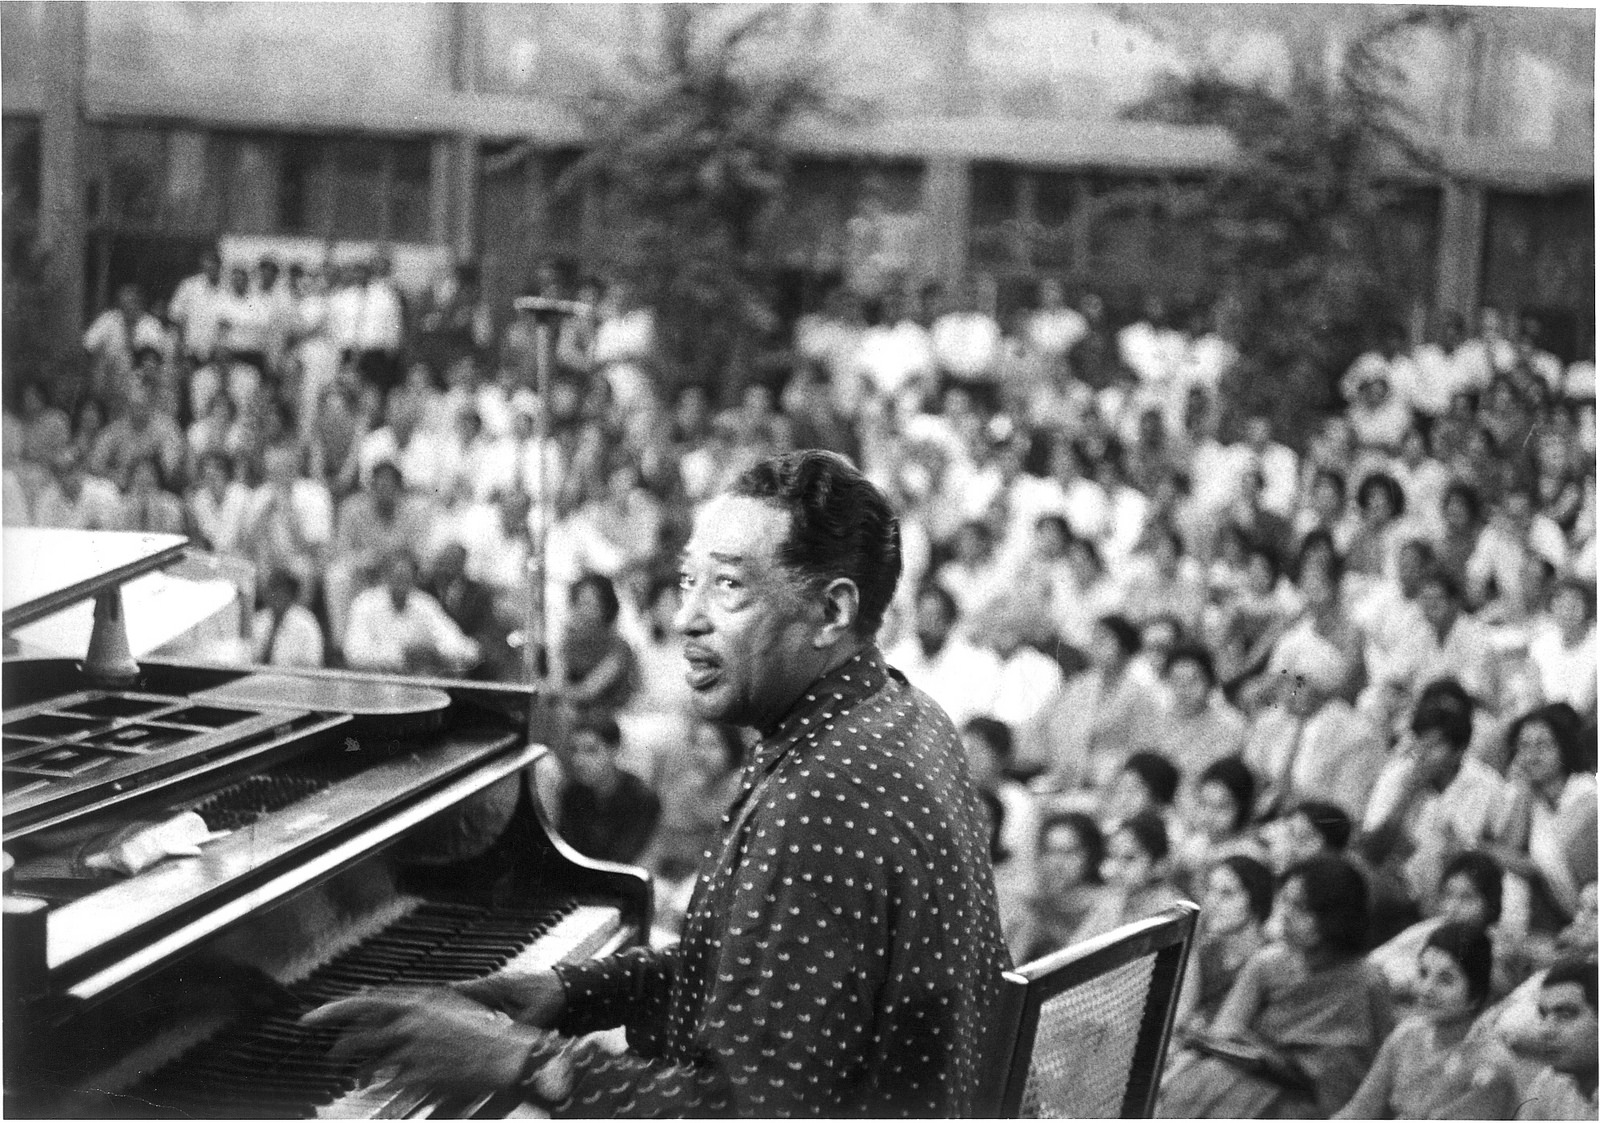 CELEBRATING DUKE ELLINGTON: The late jazz legend continues inspiring musicians and listeners